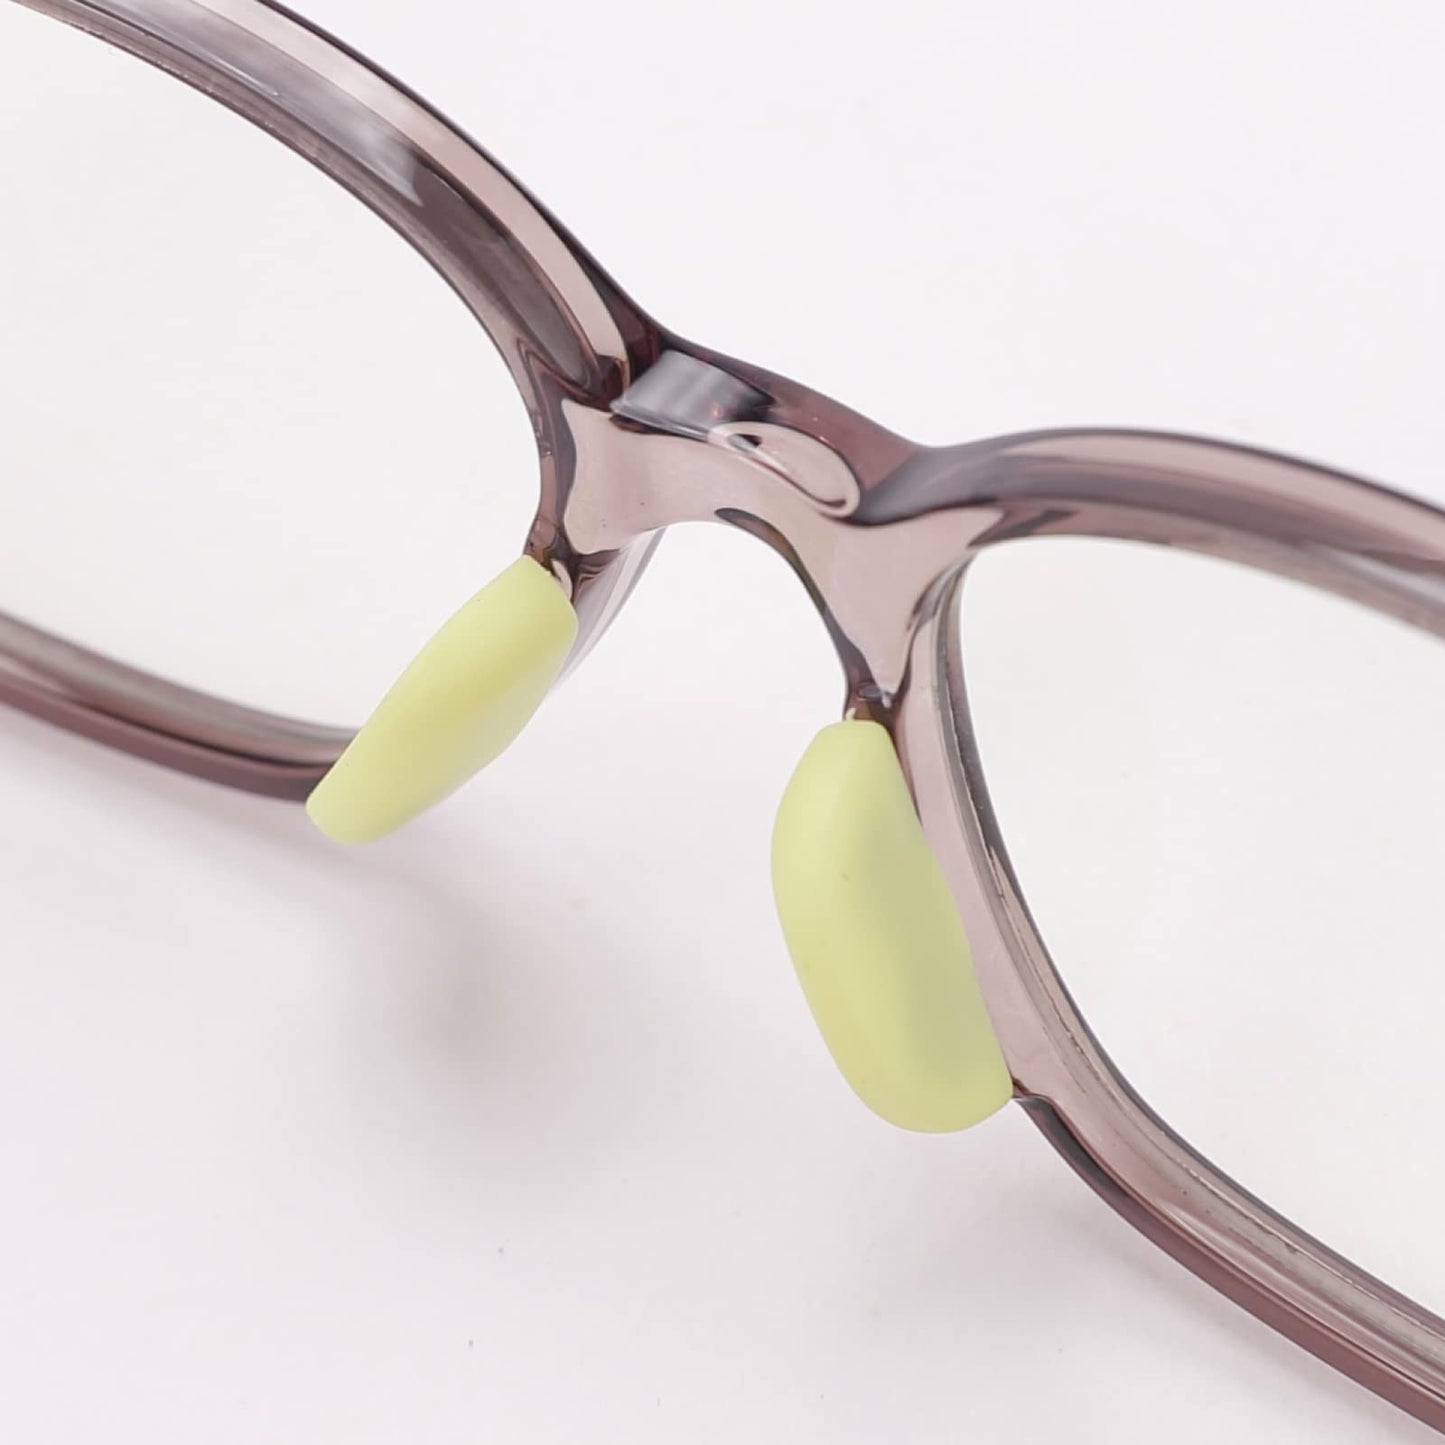 Intellilens  Zero Power Blue Cut Computer Glasses  Anti Glare Lightweight  Blocks Harmful Rays  UV Protection Specs  For Boys  Girls  Grey Oval Small